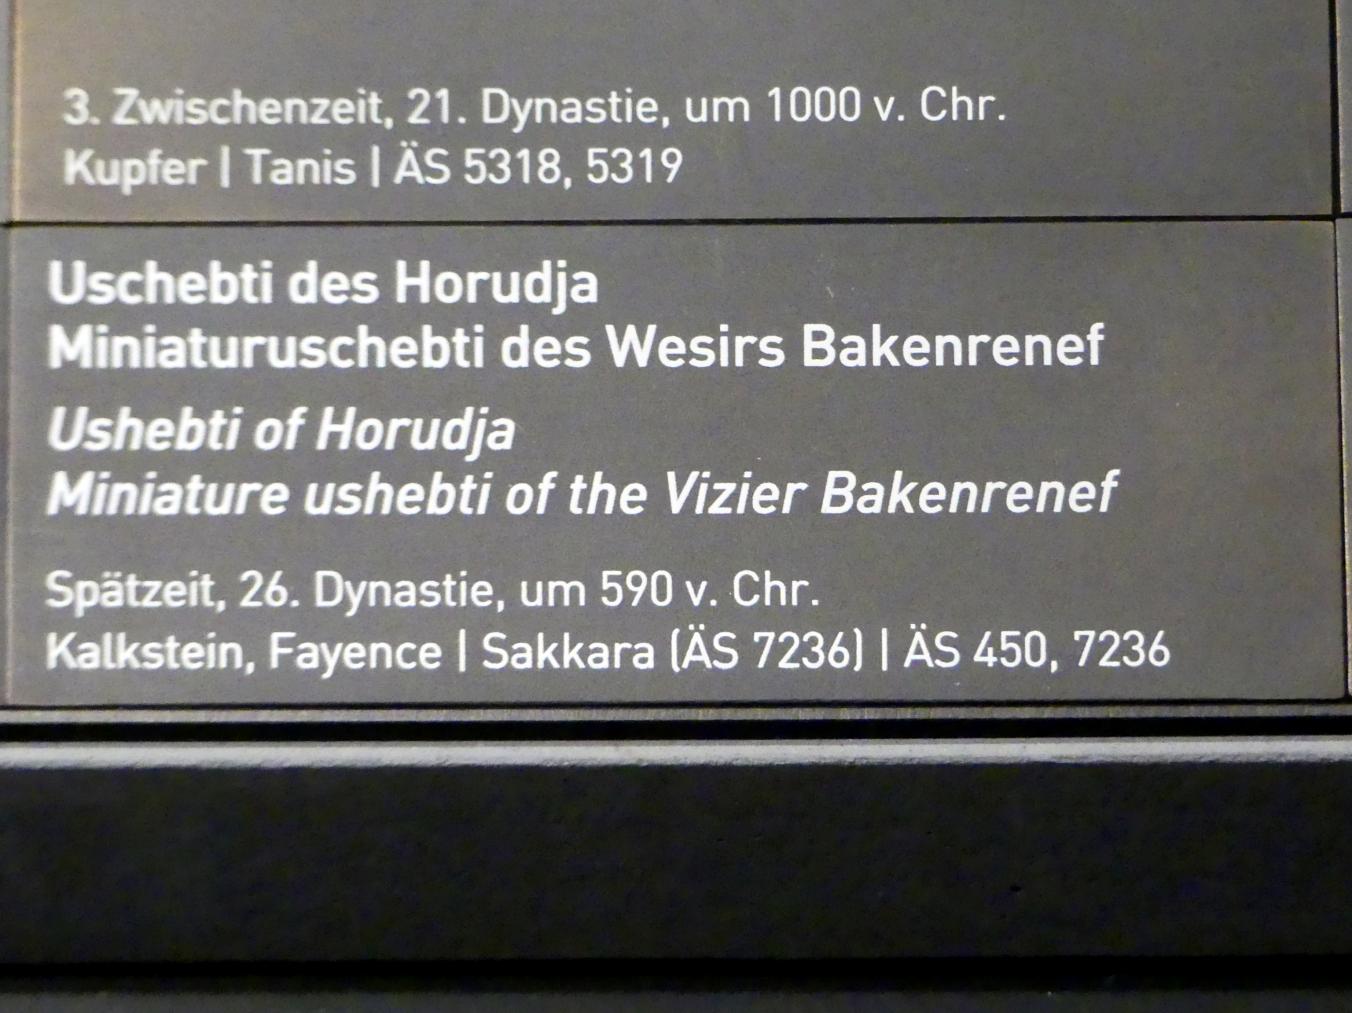 Miniaturuschebti des Wesirs Bakenrenef, 26. Dynastie, 526 - 525 v. Chr., 590 v. Chr., Bild 2/2